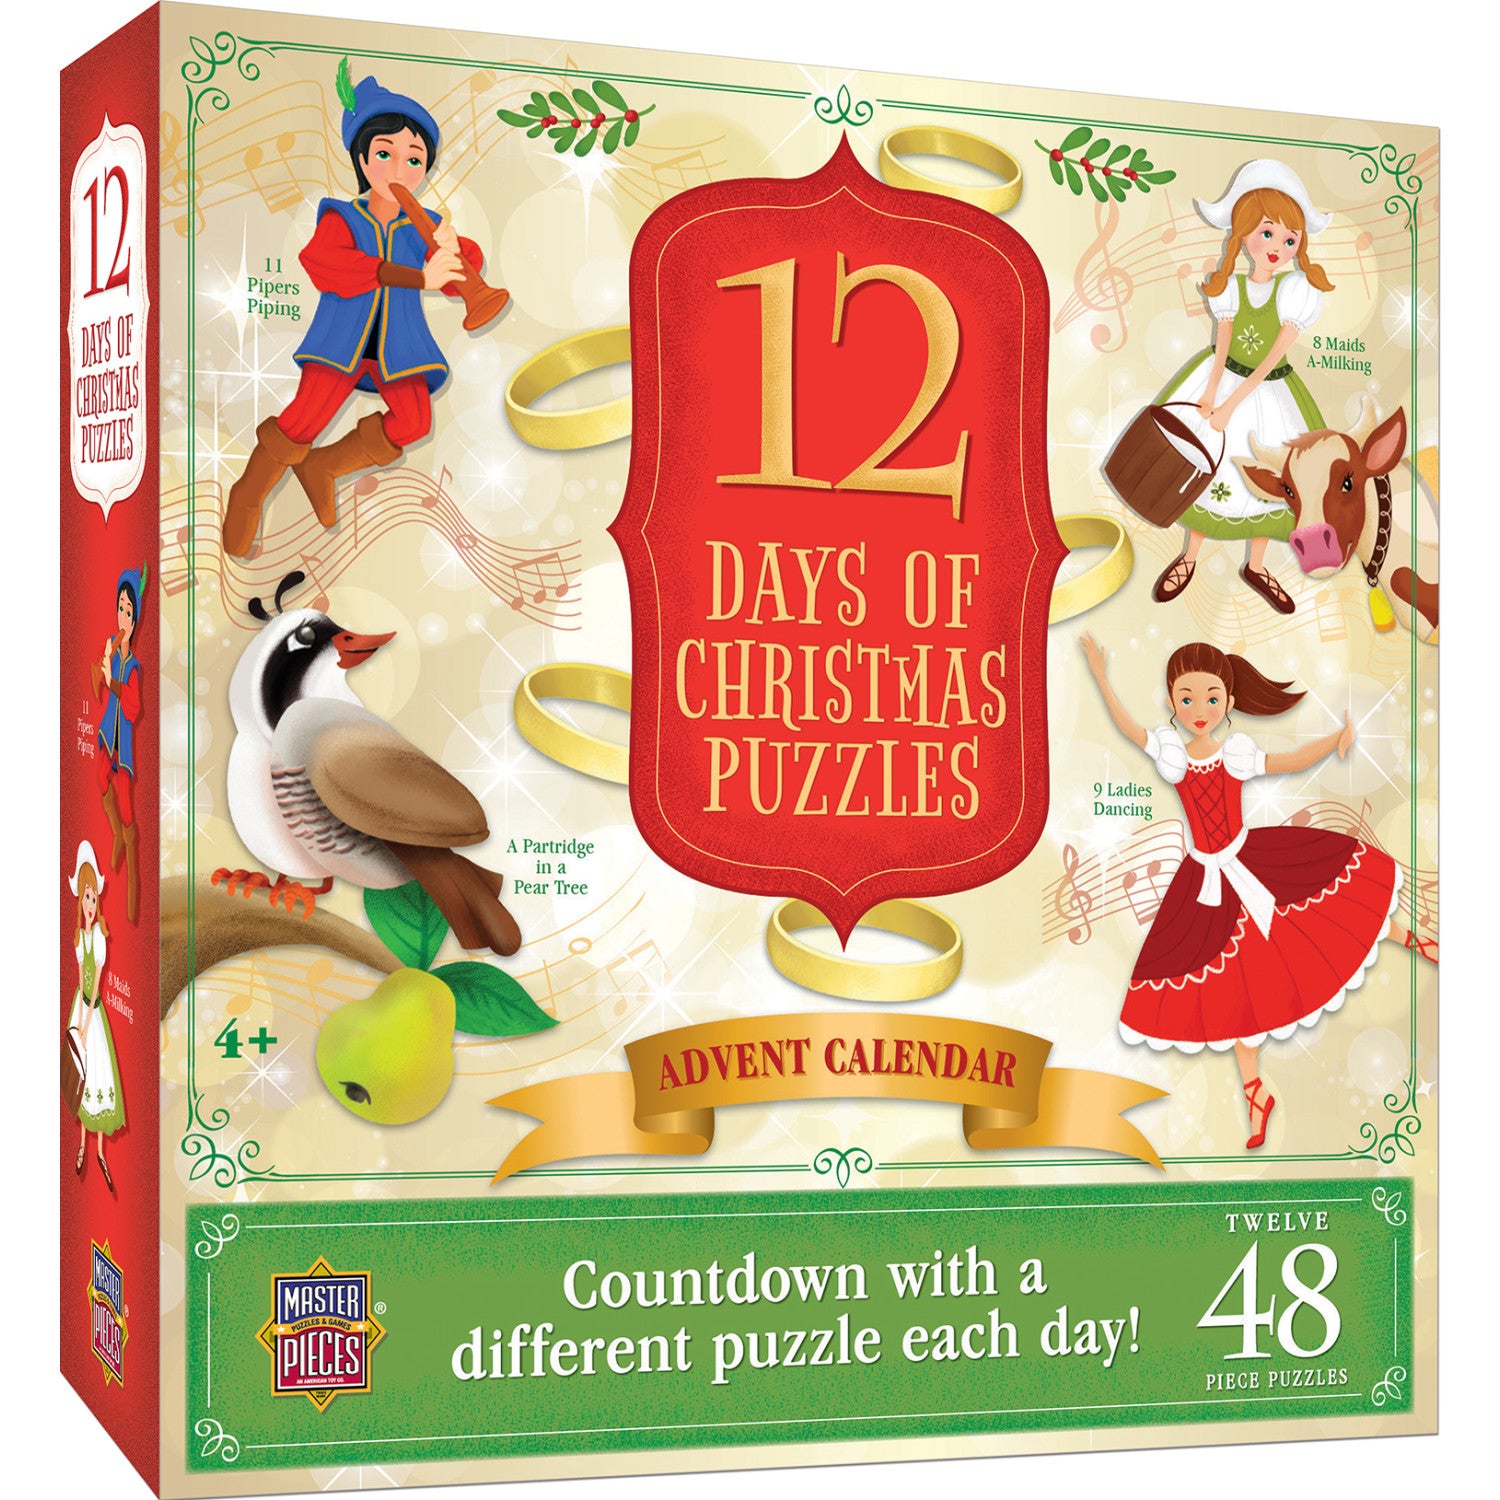 12 Days of Christmas Puzzles - Advent Calendar